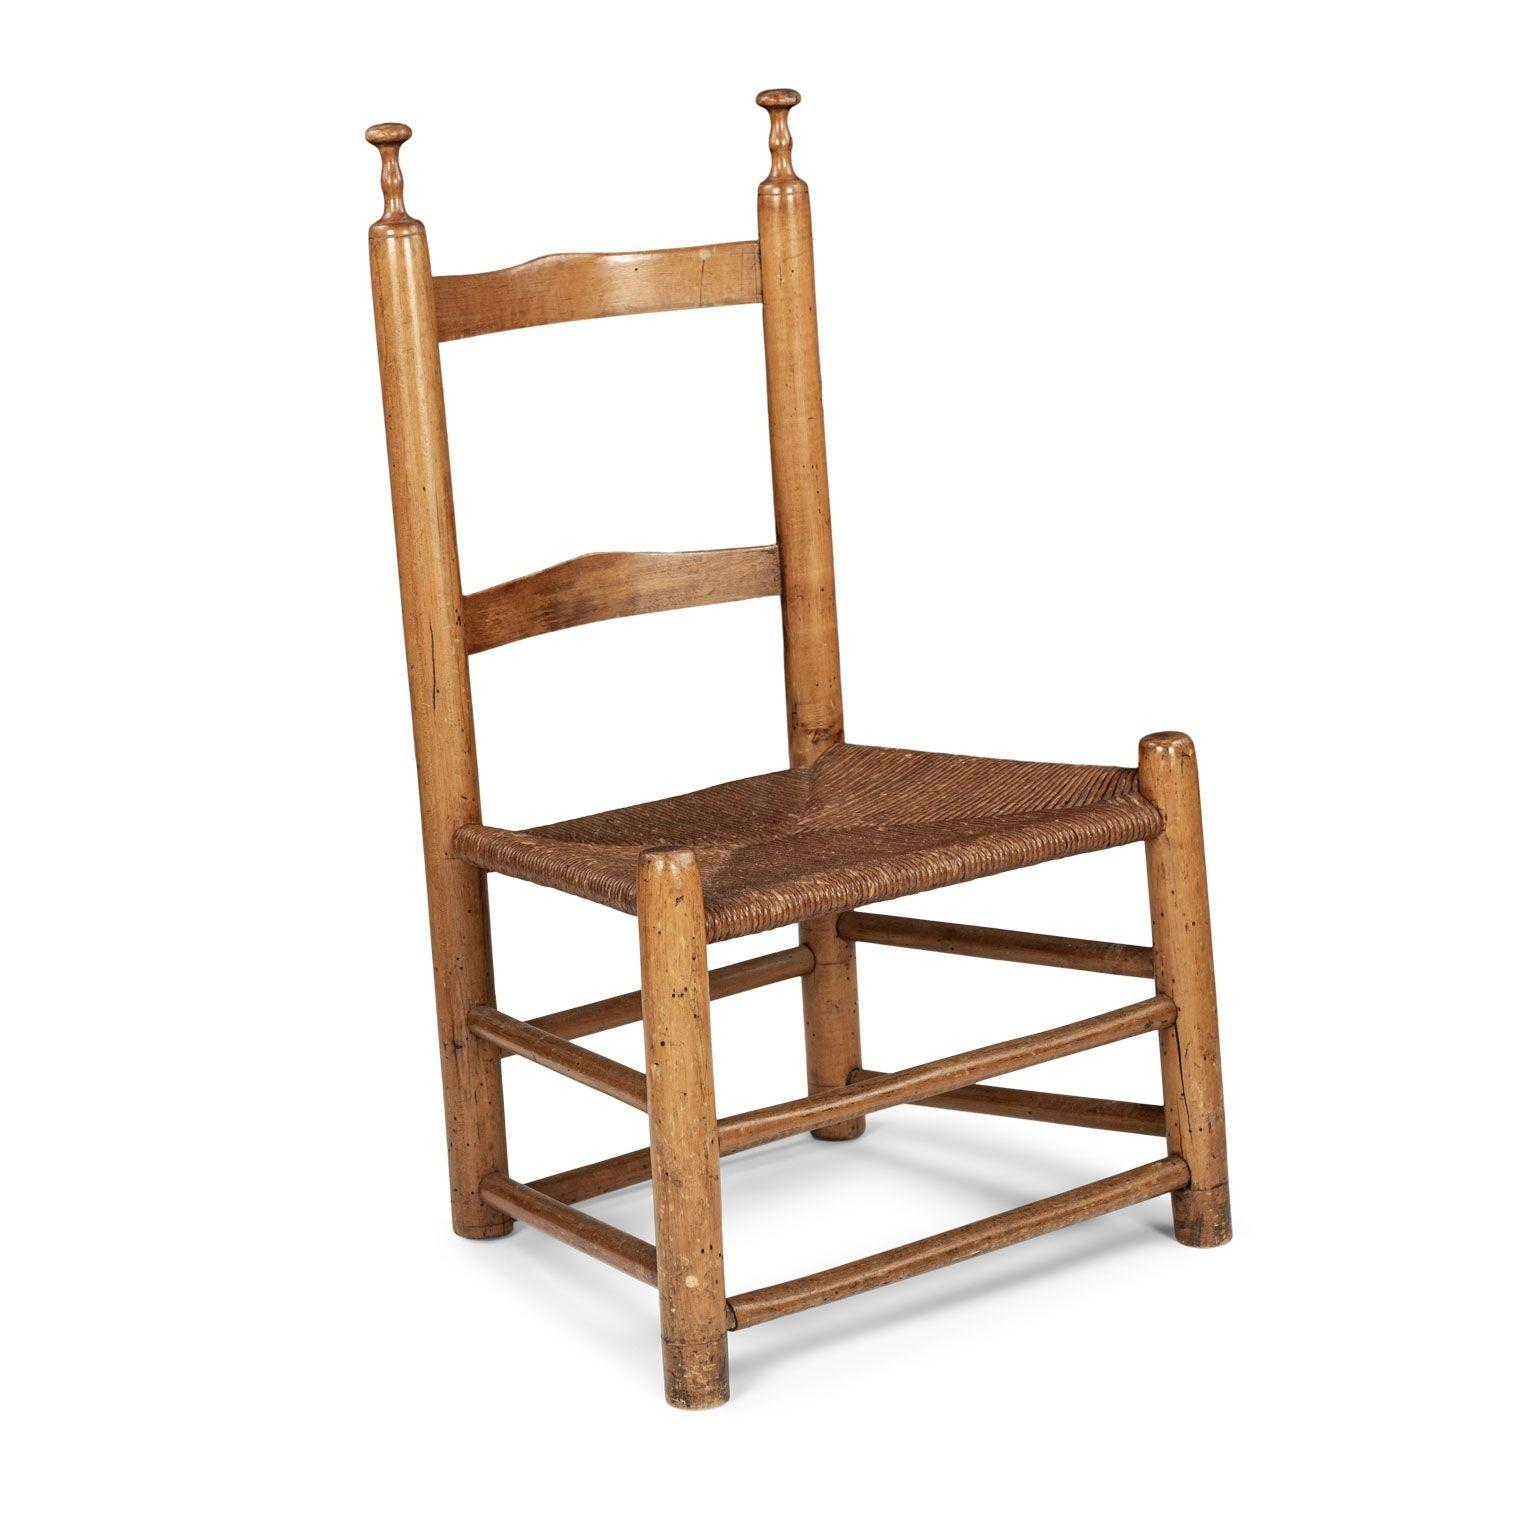 Hand-Woven Vernacular Ladder Back Chair